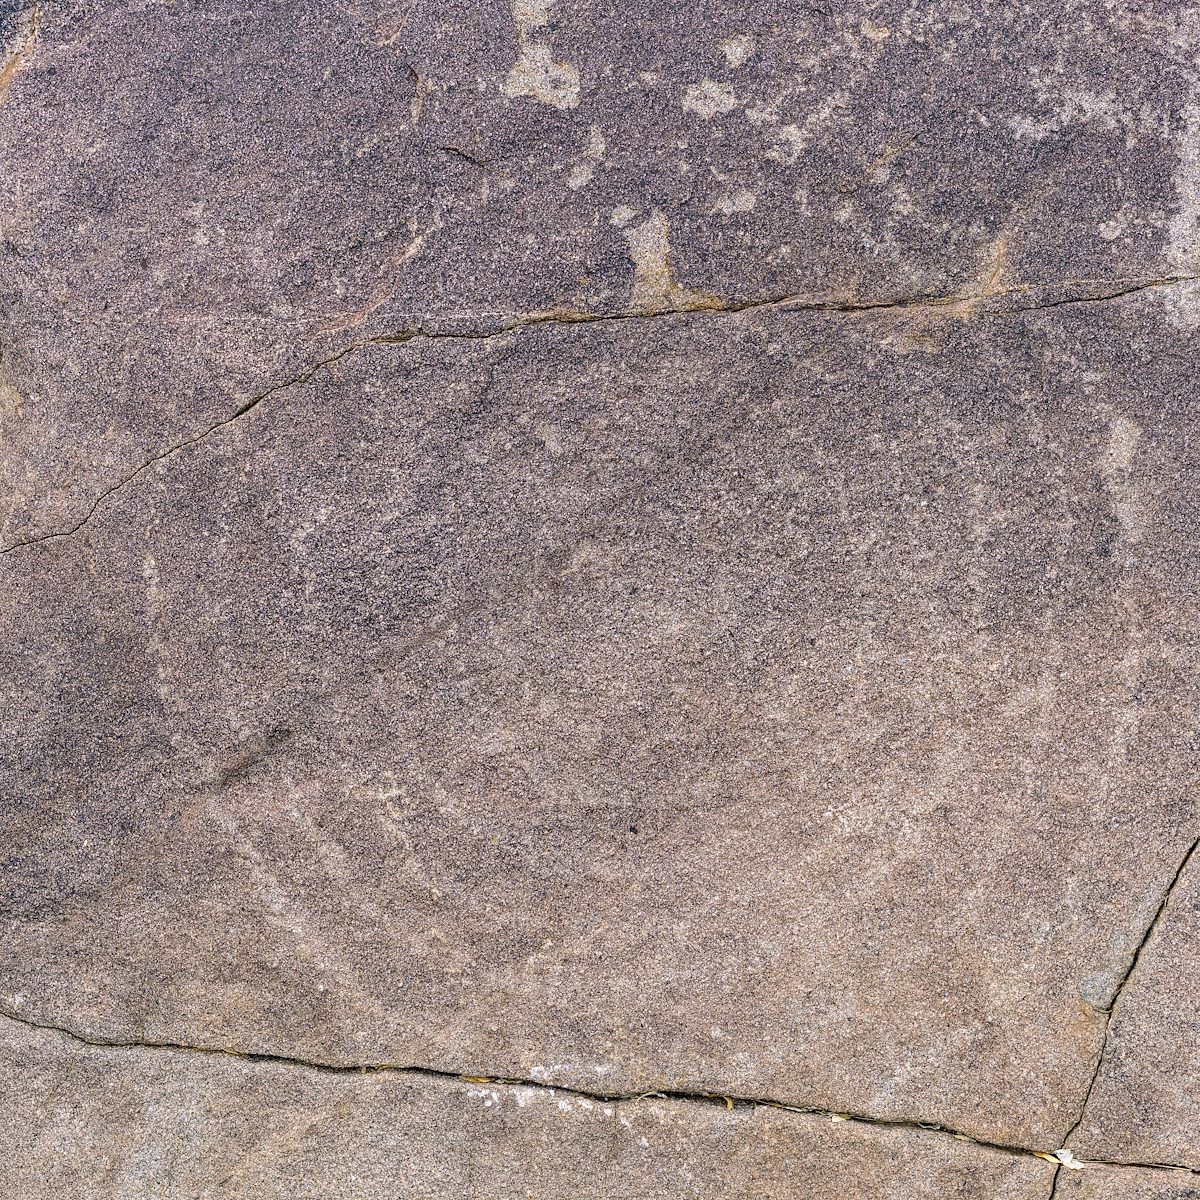 2018 January Petroglyphs 16